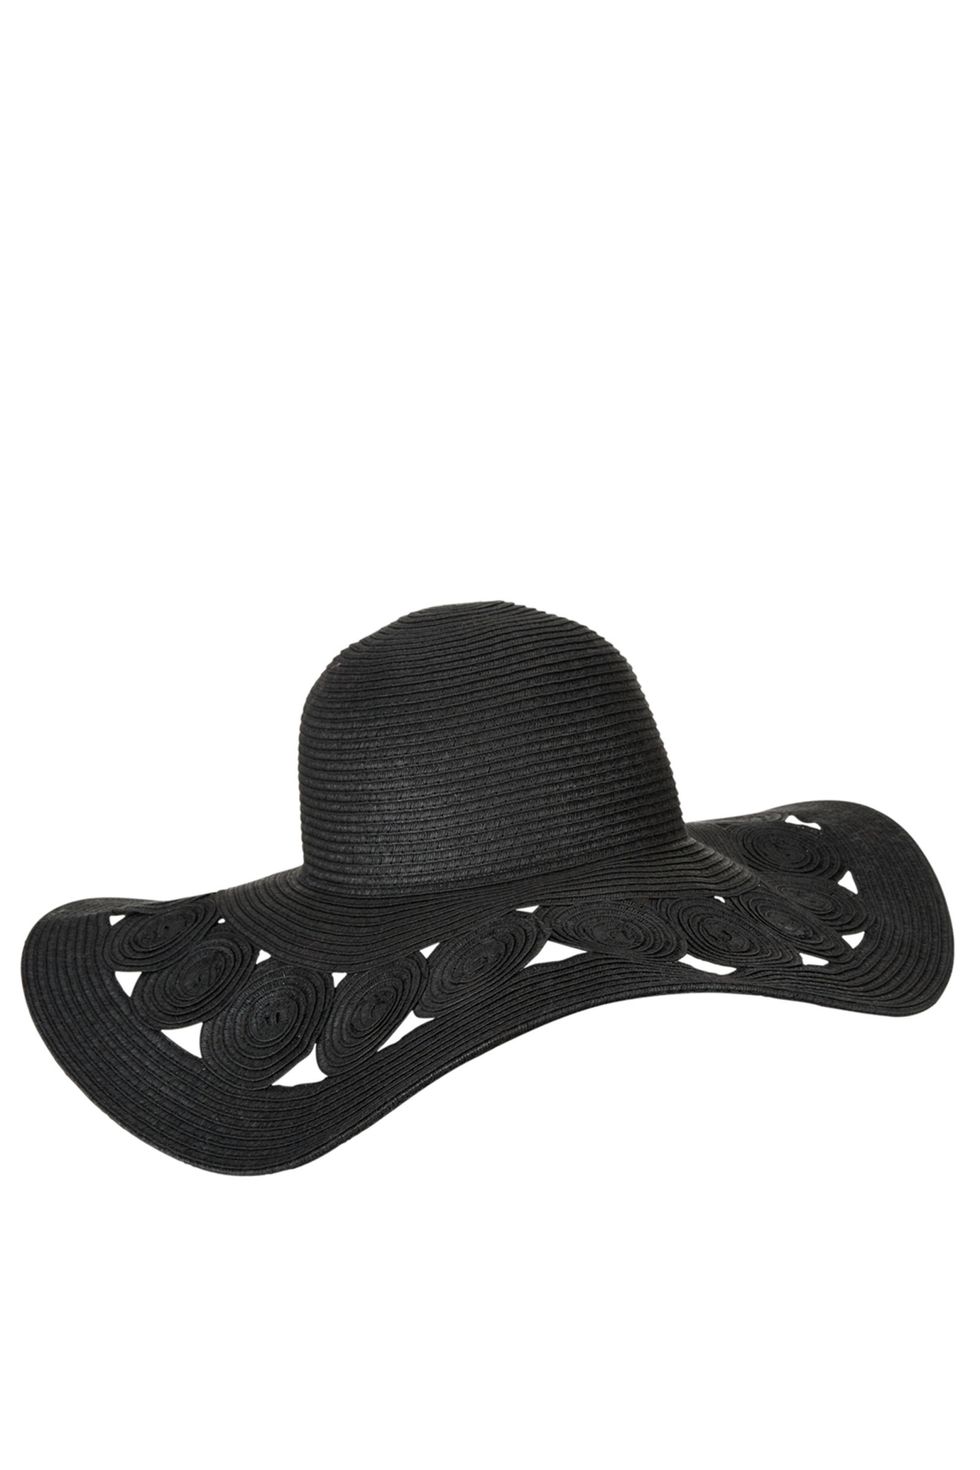 Hat, Headgear, Costume accessory, Black, Costume hat, Beige, Fedora, Black-and-white, Sun hat, 